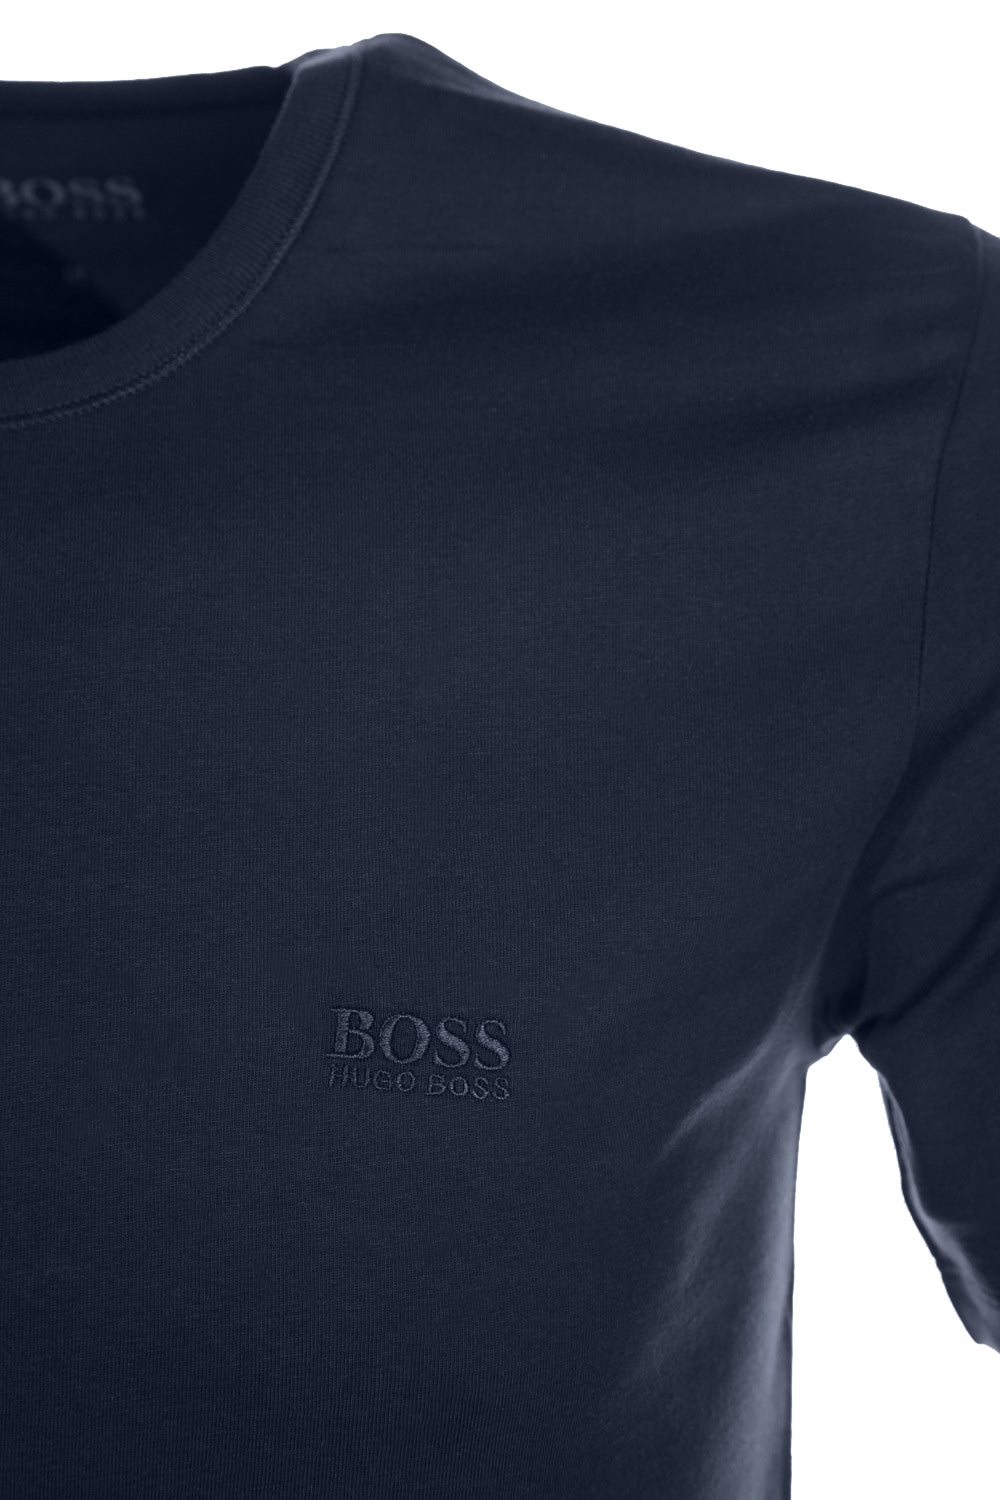 BOSS 3 Pack RN T Shirt in Navy Shoulder